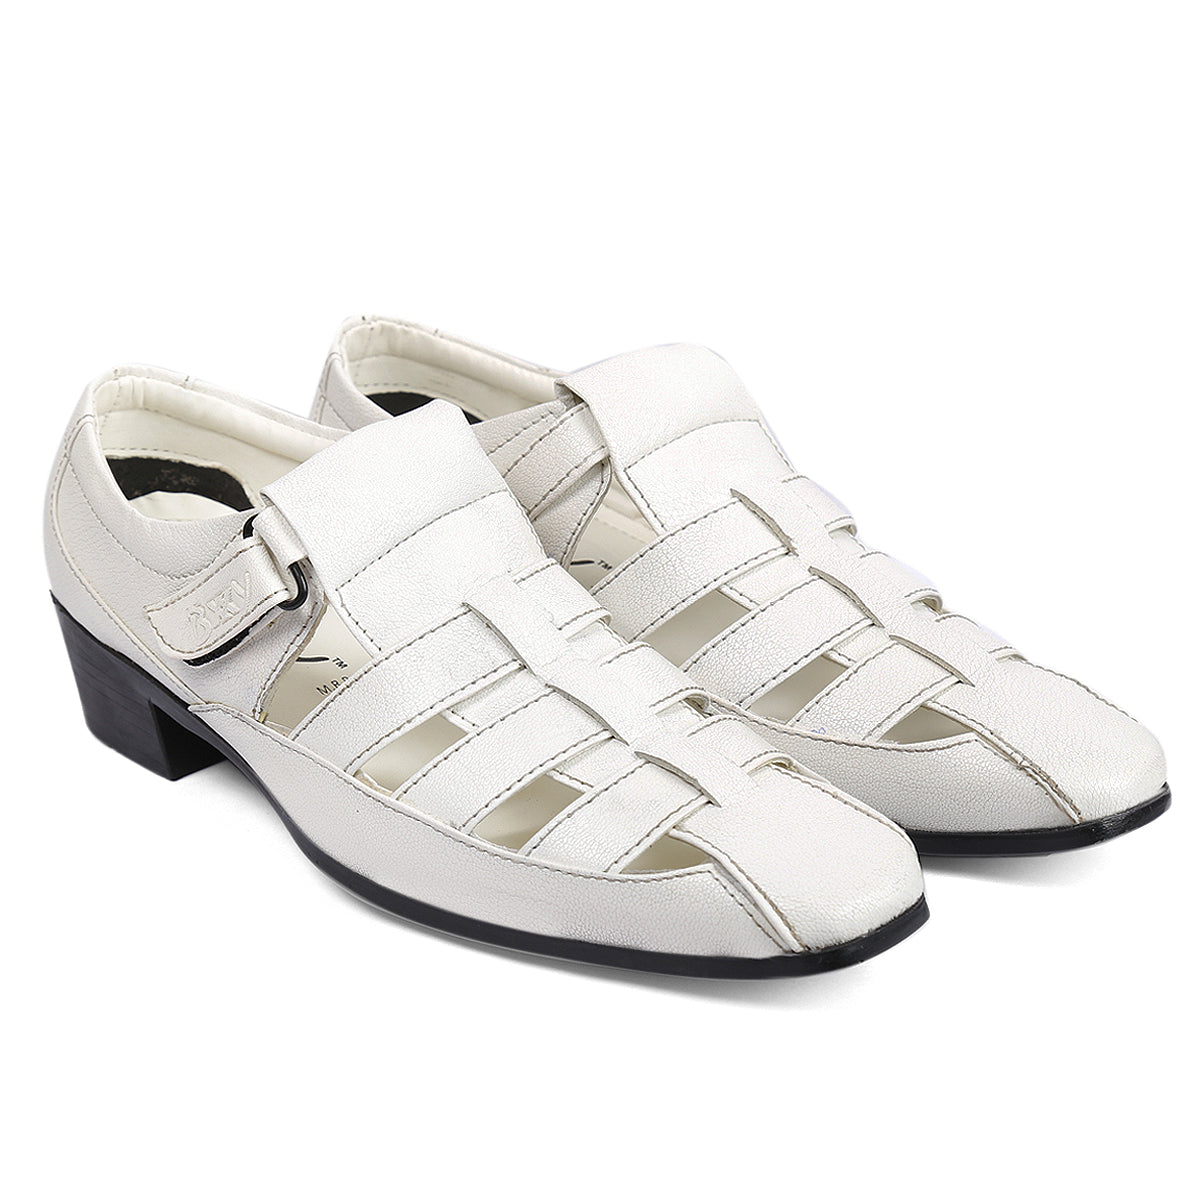 Buy Women Black Casual Gladiators Online | SKU: 33-327-11-36-Metro Shoes